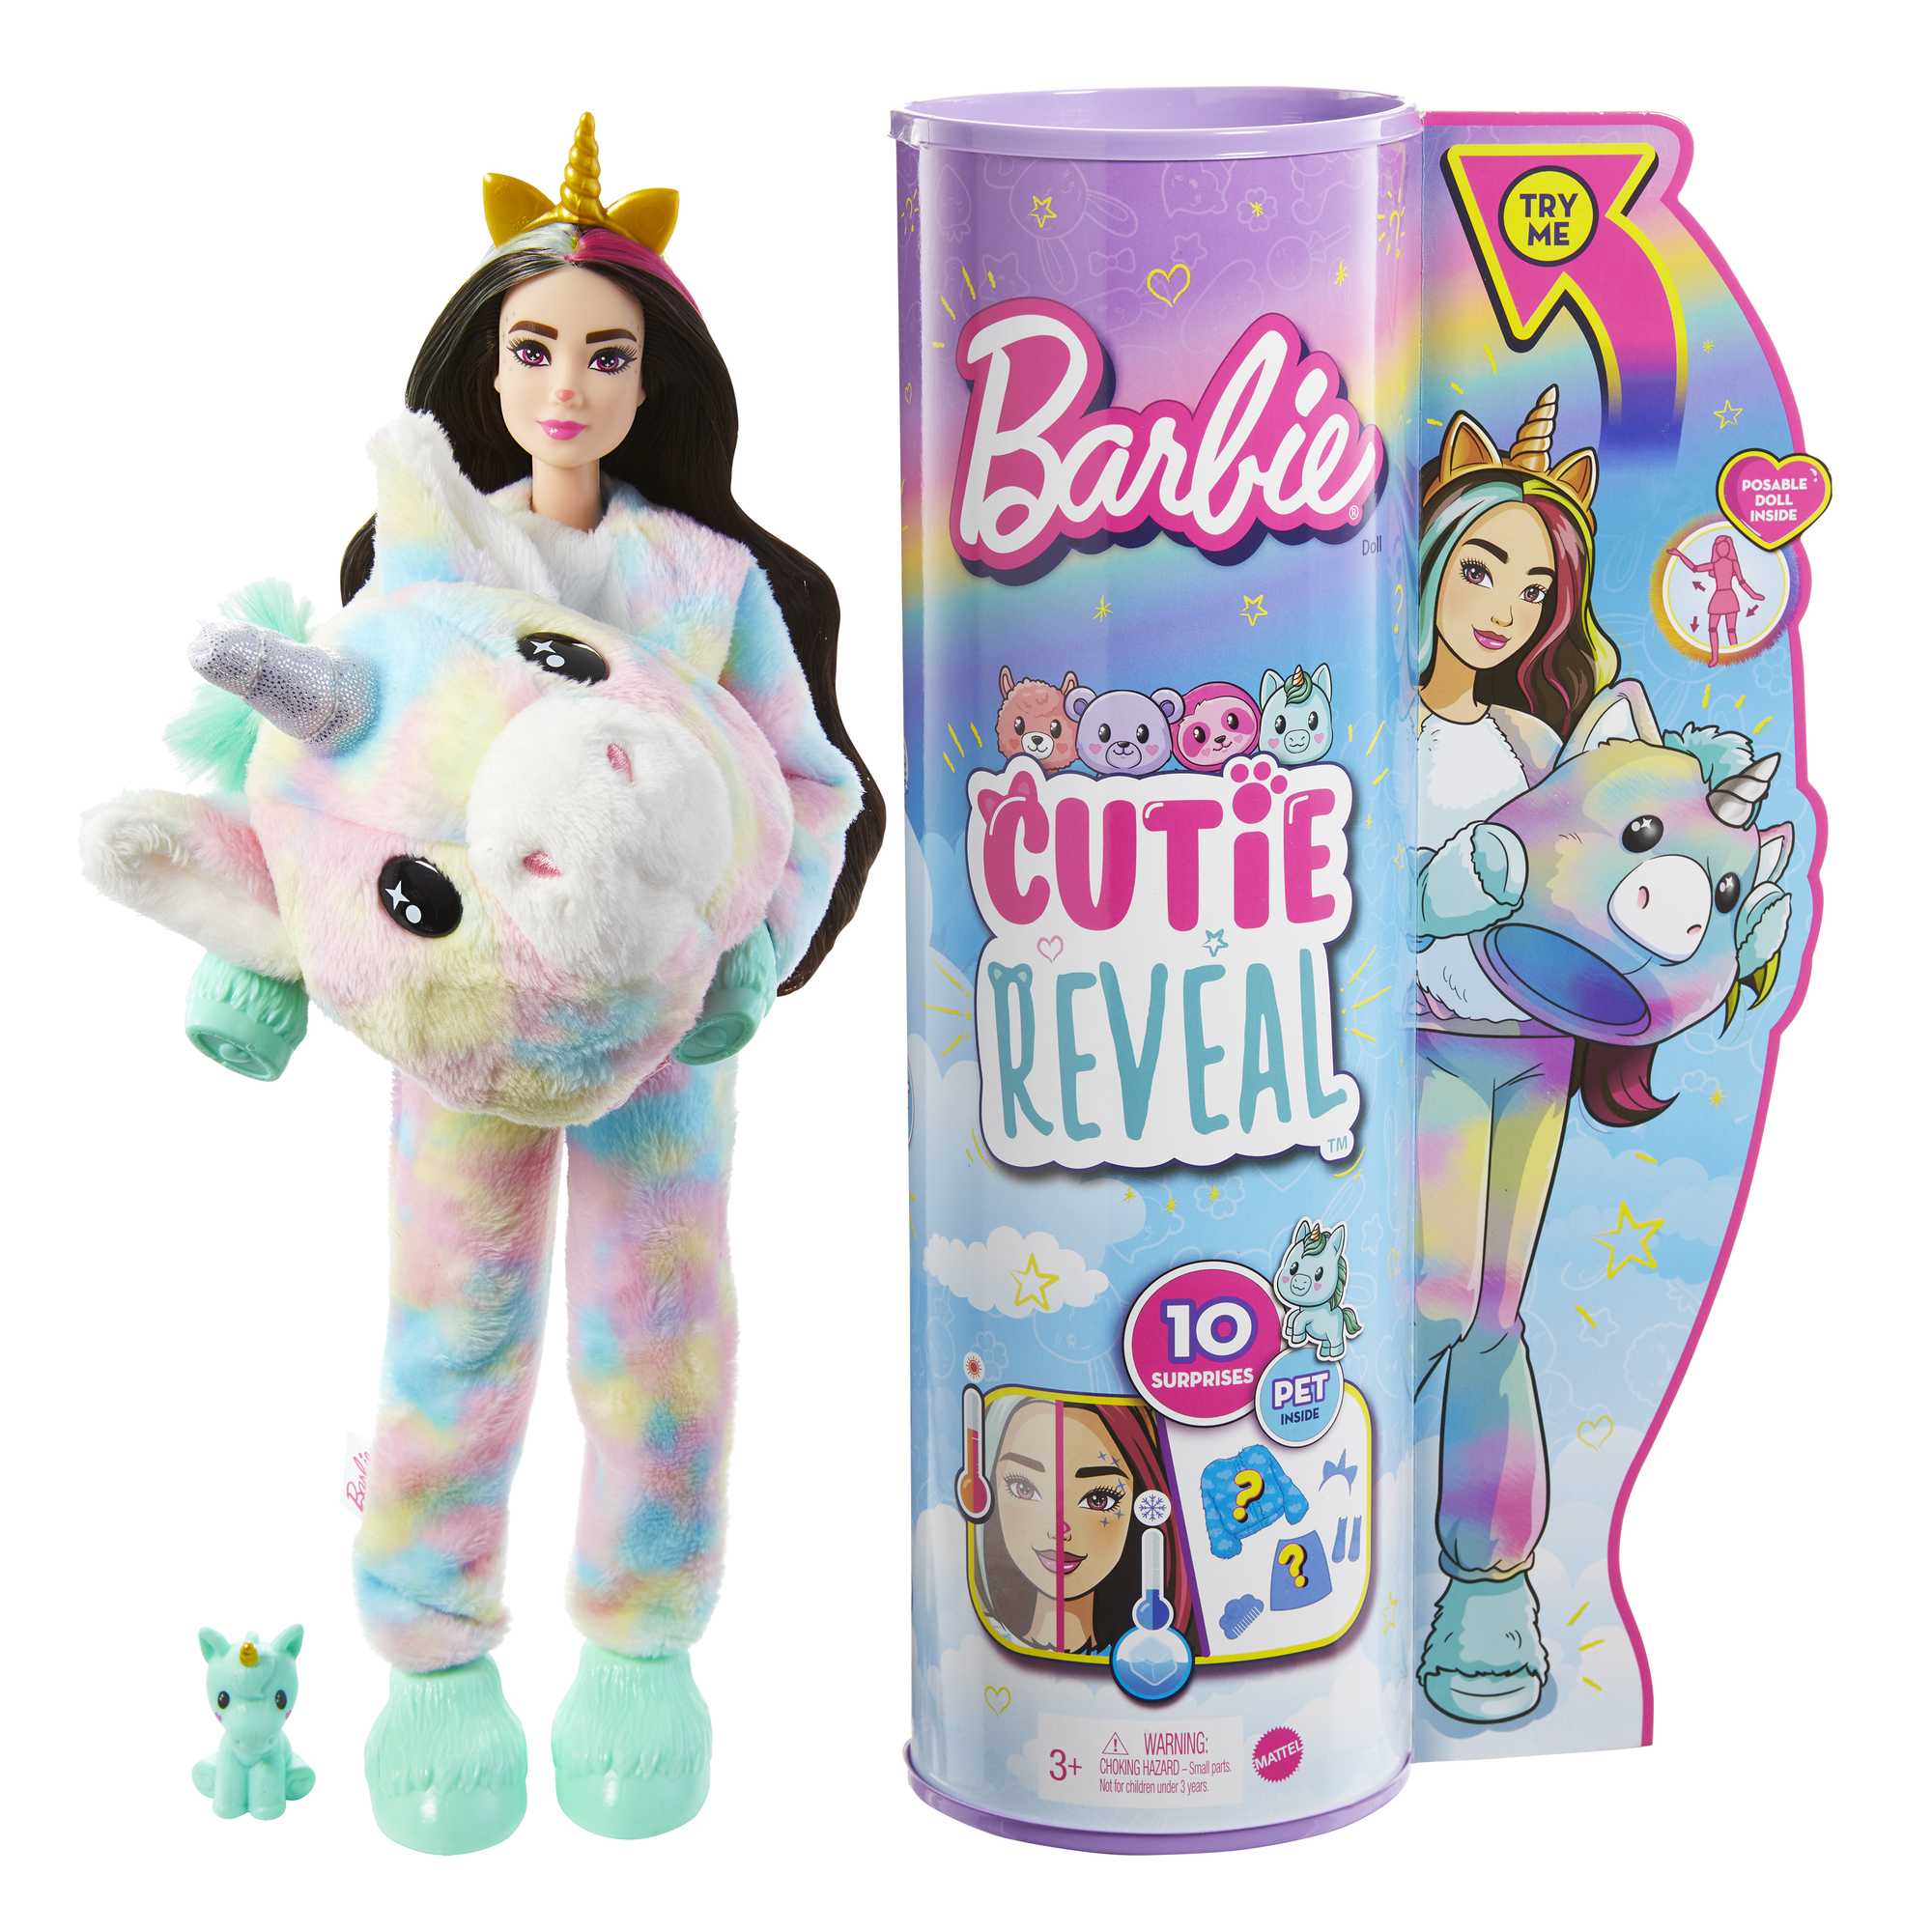 Barbie Cutie Reveal Fantasy Series Doll with Unicorn Plush Costume, HJL58